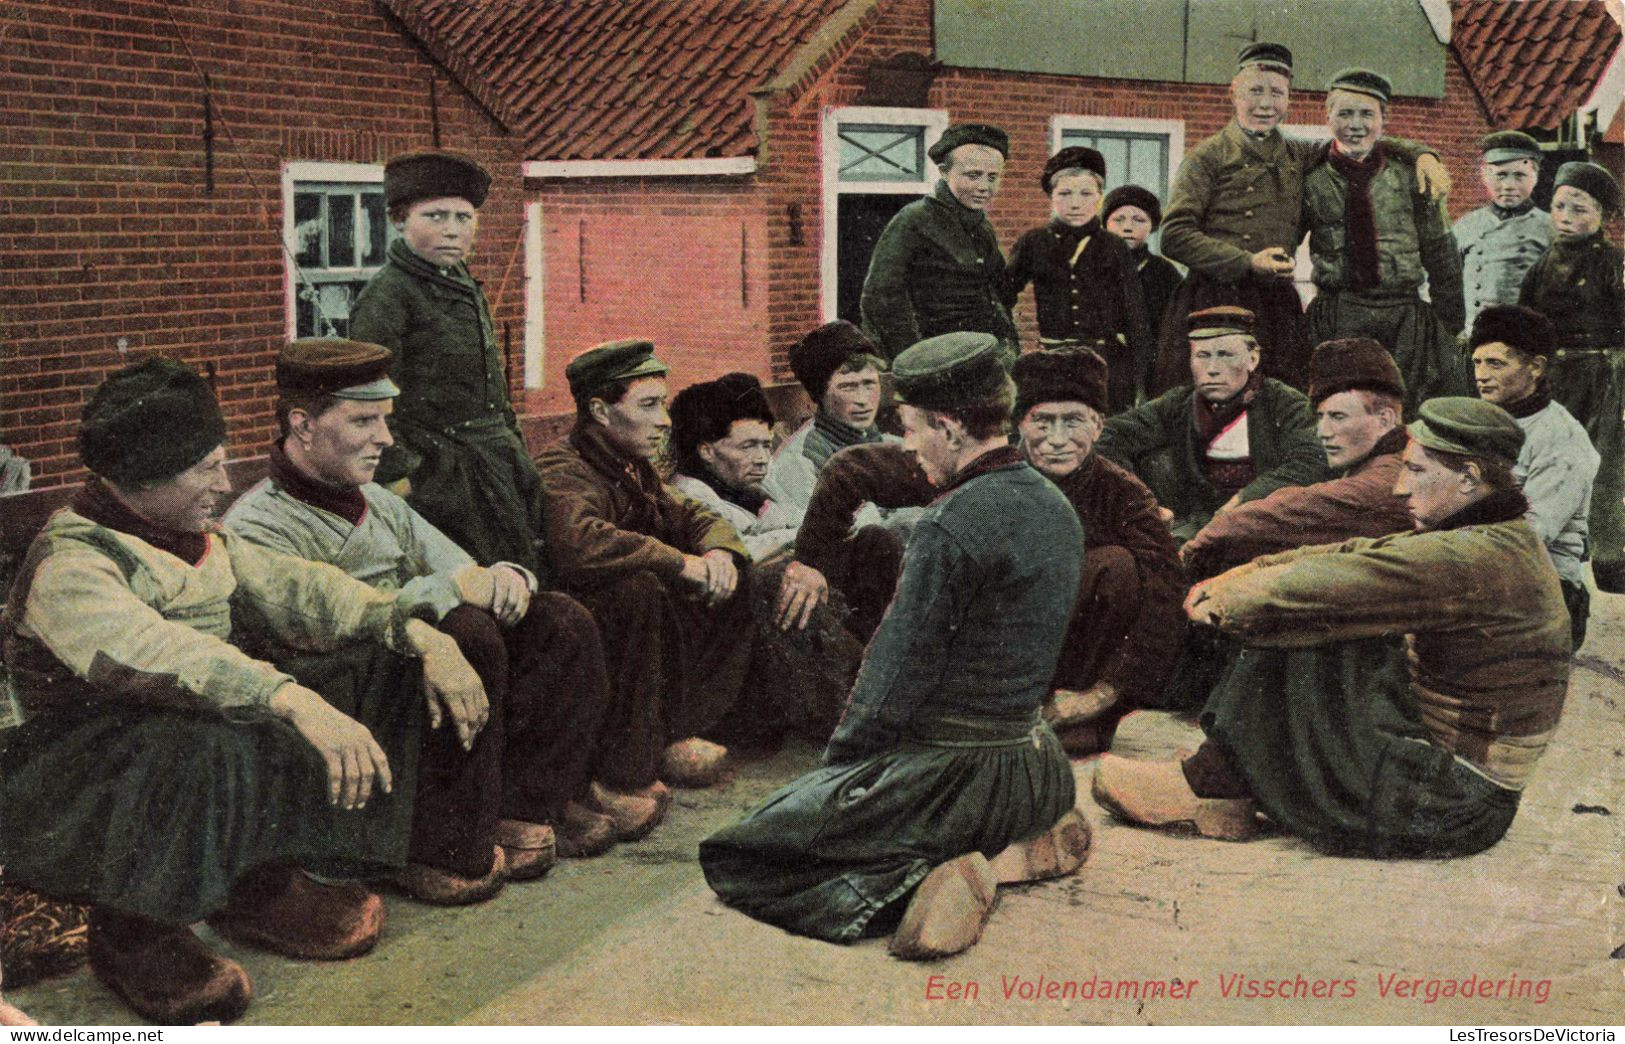 PHOTOGRAPHIE - Een Volendammer Visschers Vergadering - Colorisé - Carte Postale Ancienne - Photographs